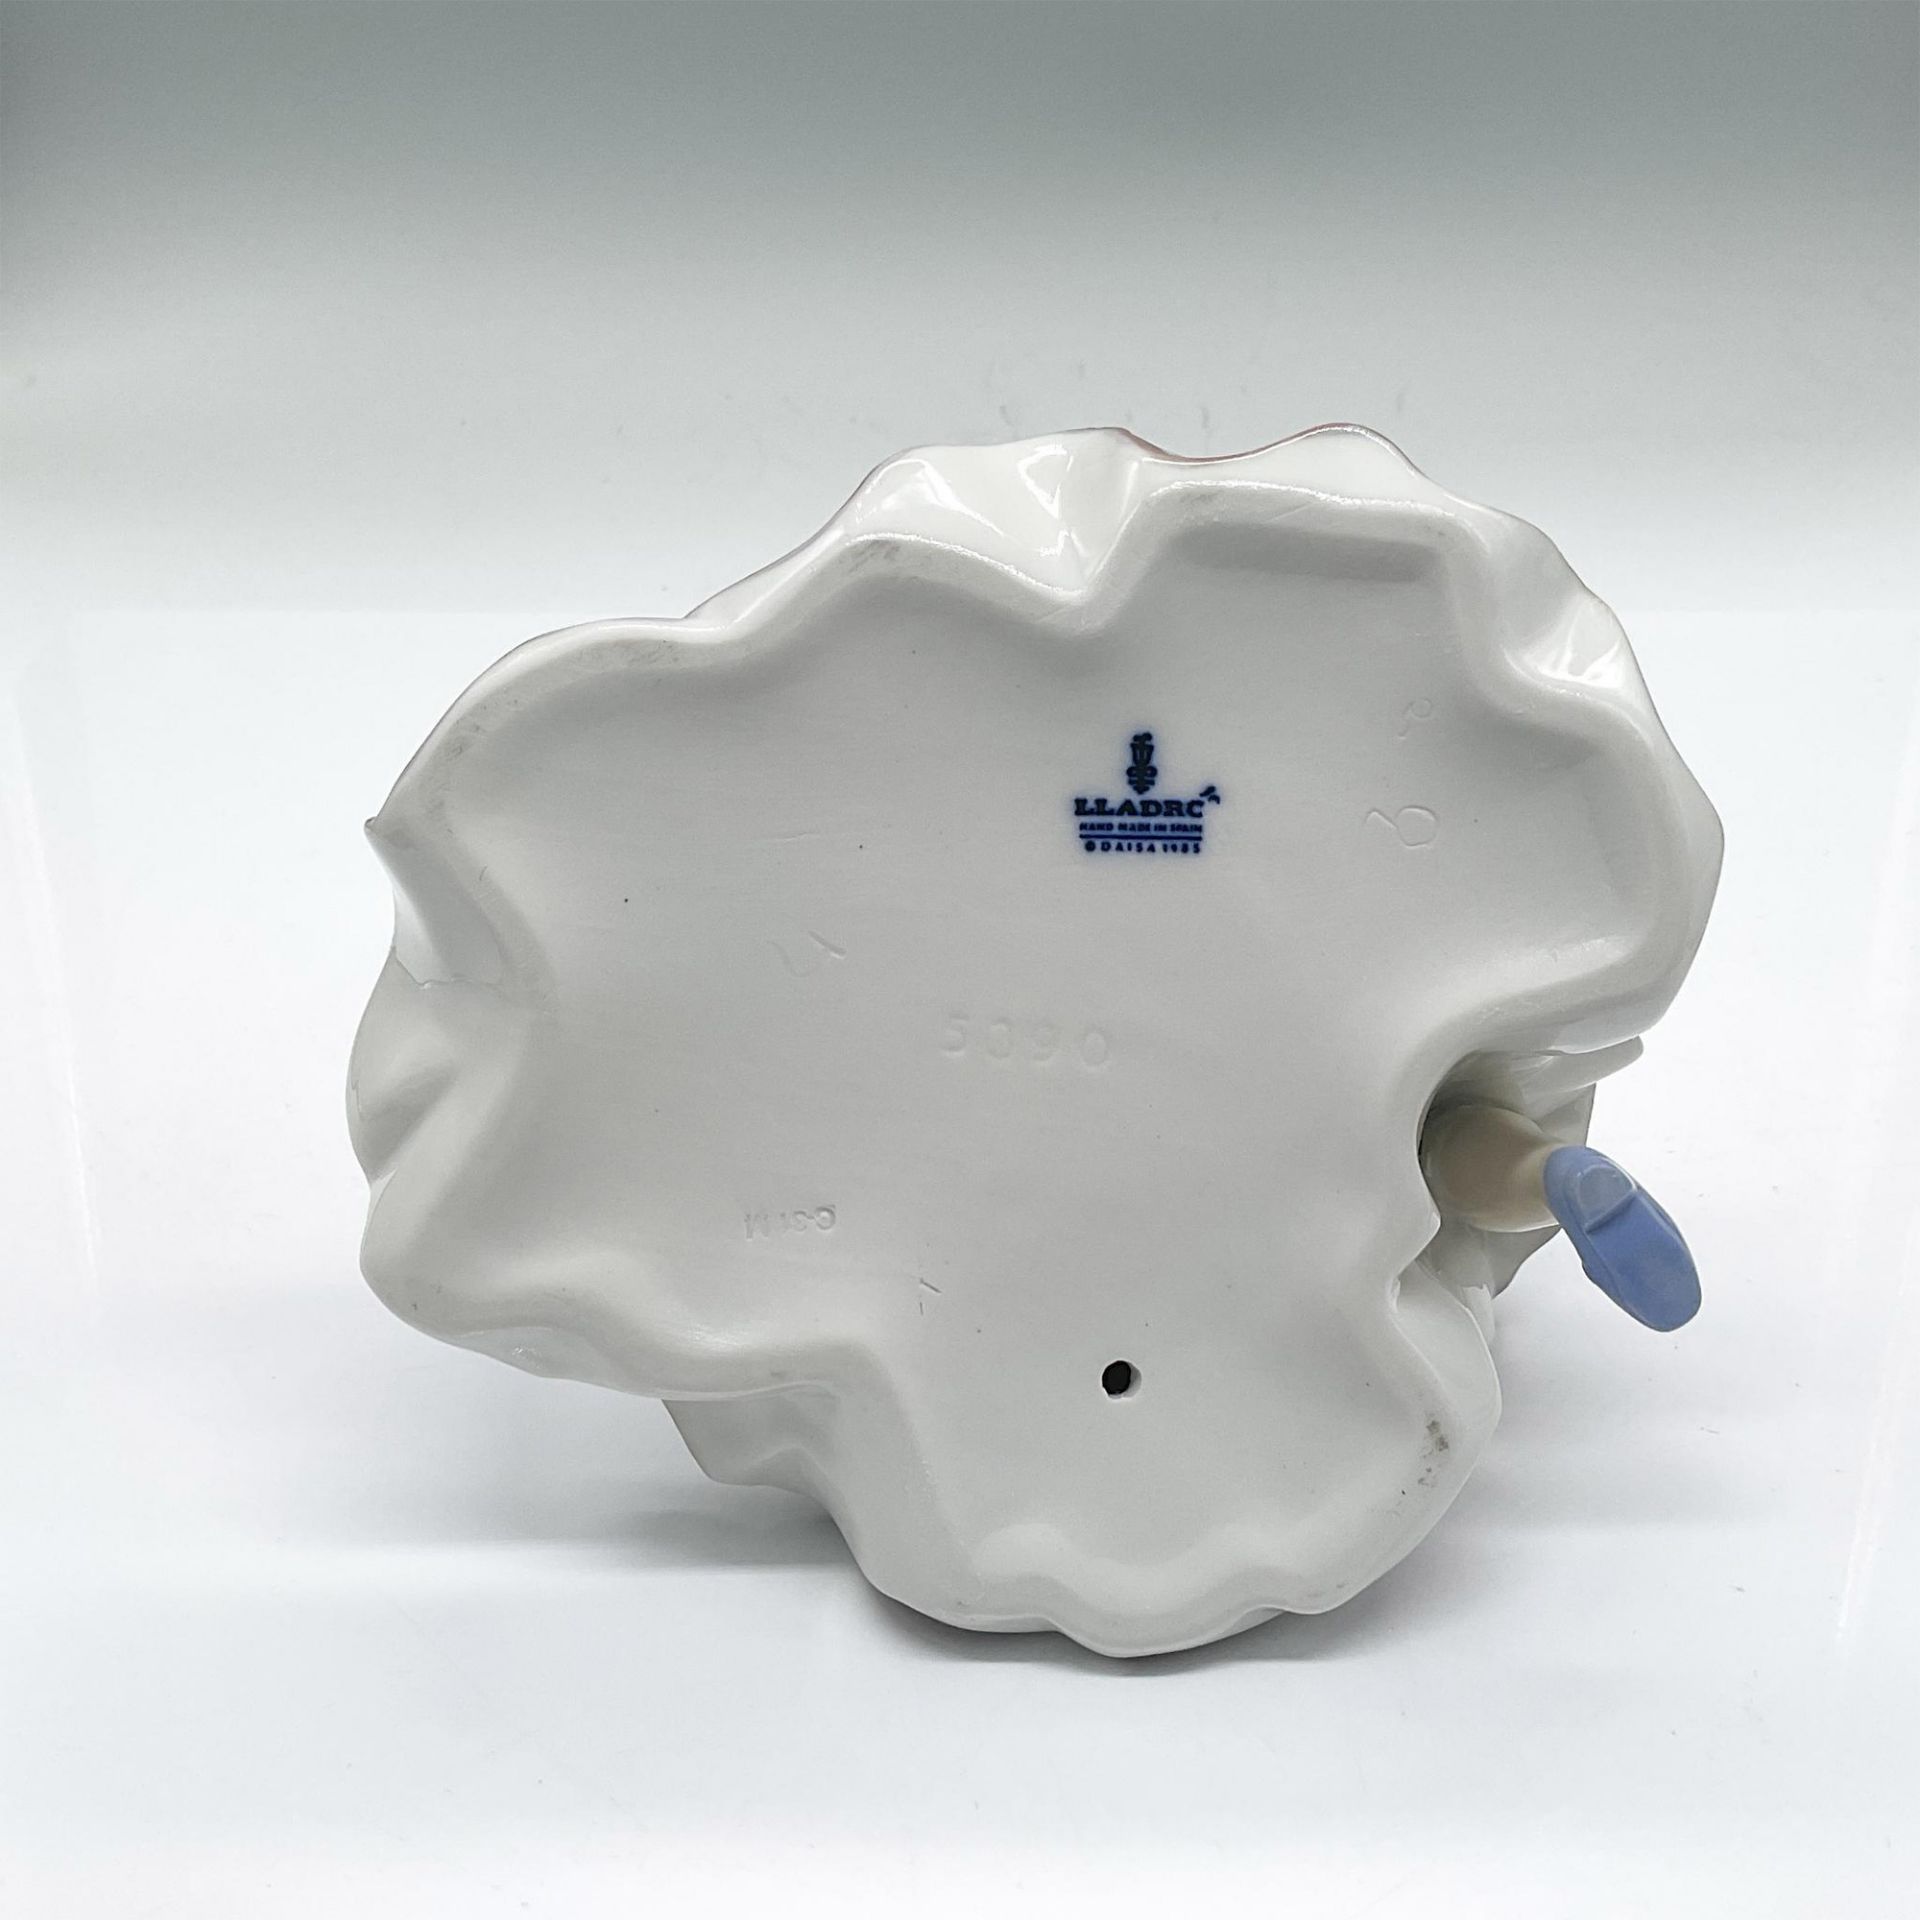 Lladro Porcelain Figurine, Spanish Dancer - Image 3 of 3